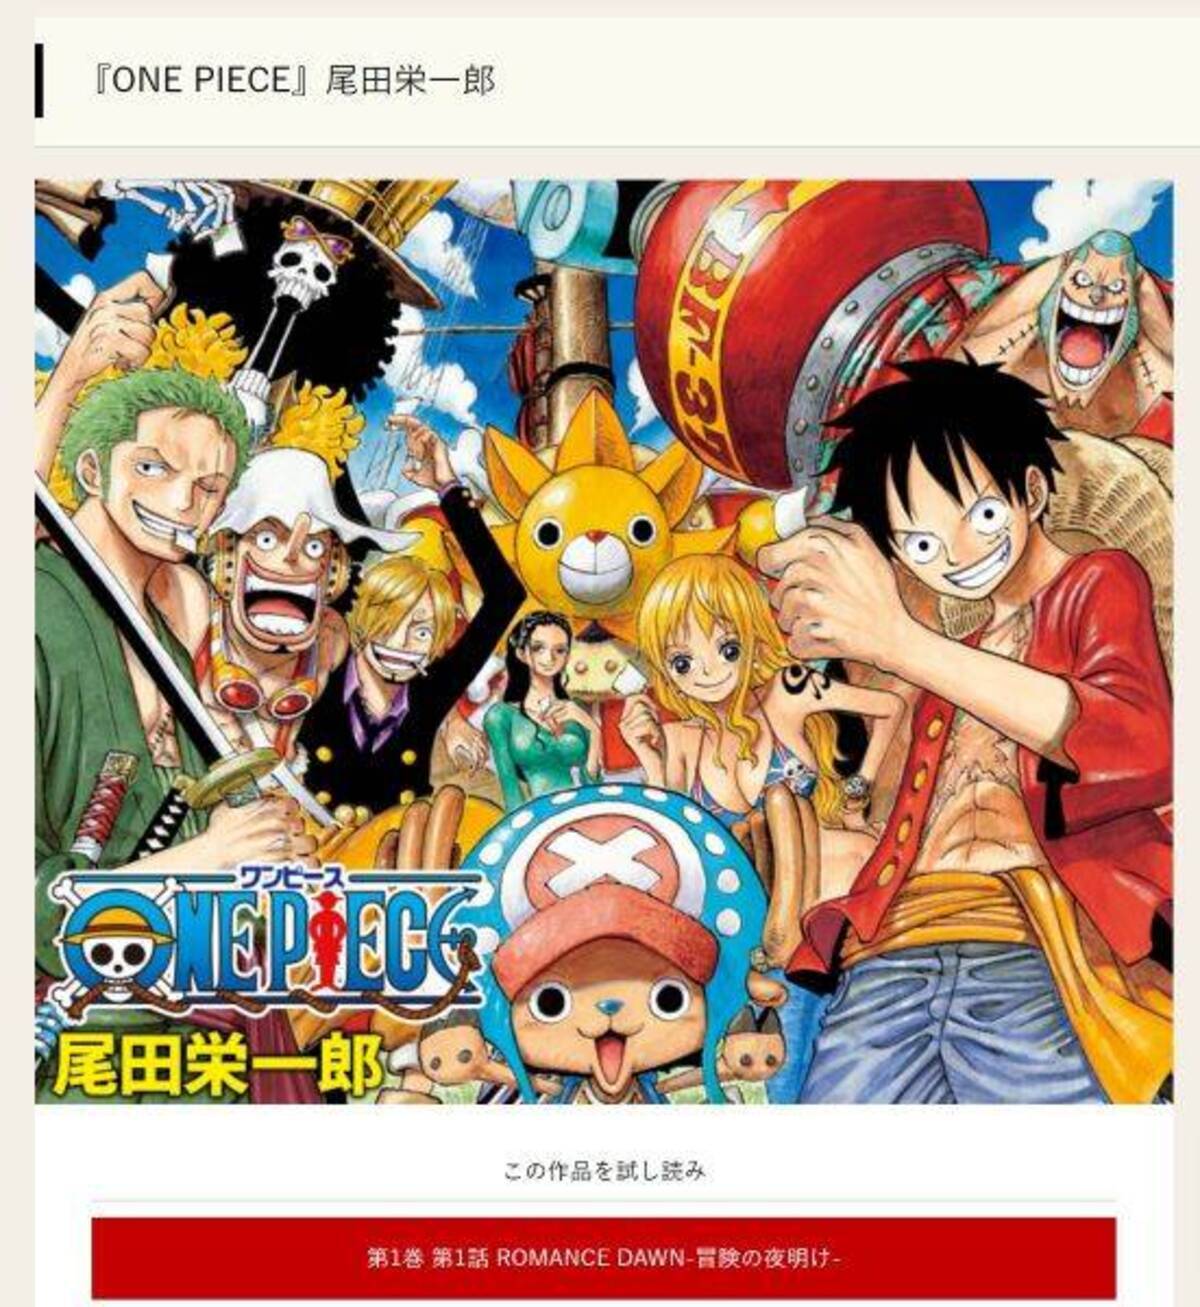 One Piece いまだ謎が残る4人の人物 イム様のラスボス説 ジョイボーイの役割とは 22年7月10日 エキサイトニュース 6 7